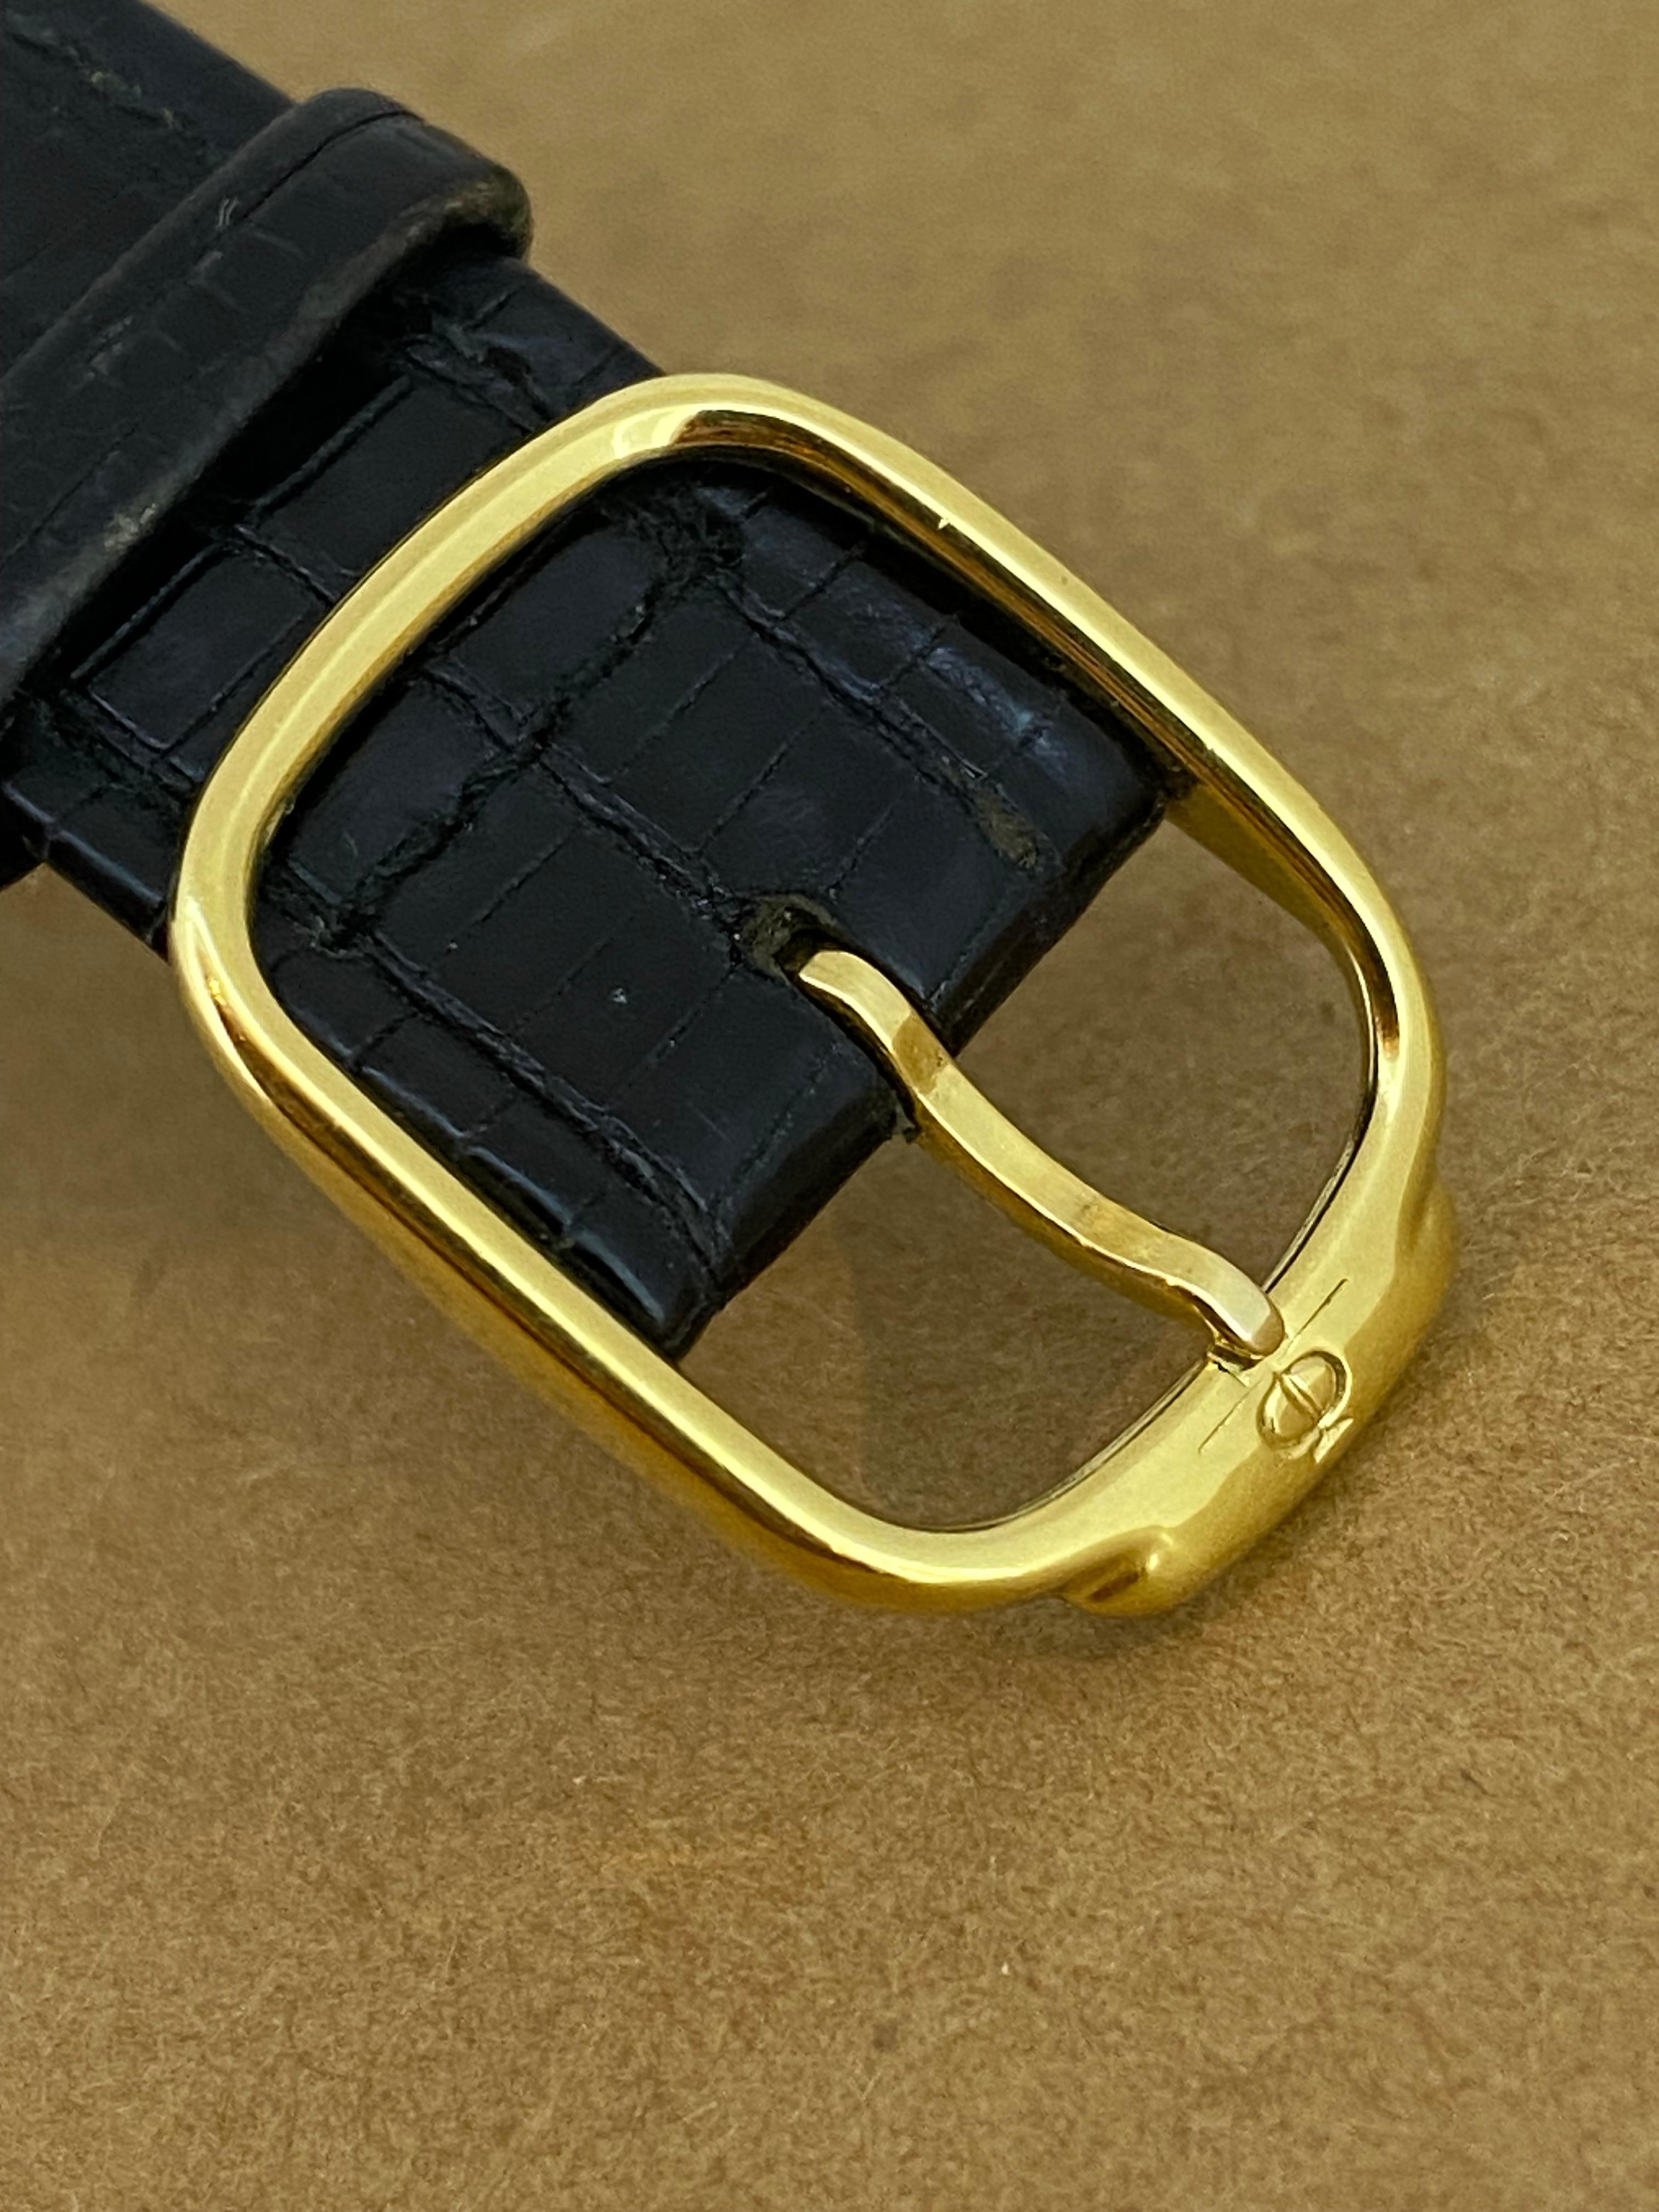 18K Yellow Gold Baume & Mercier Geneve ref 1830 Swiss Quartz Rectangle Watch For Sale 6